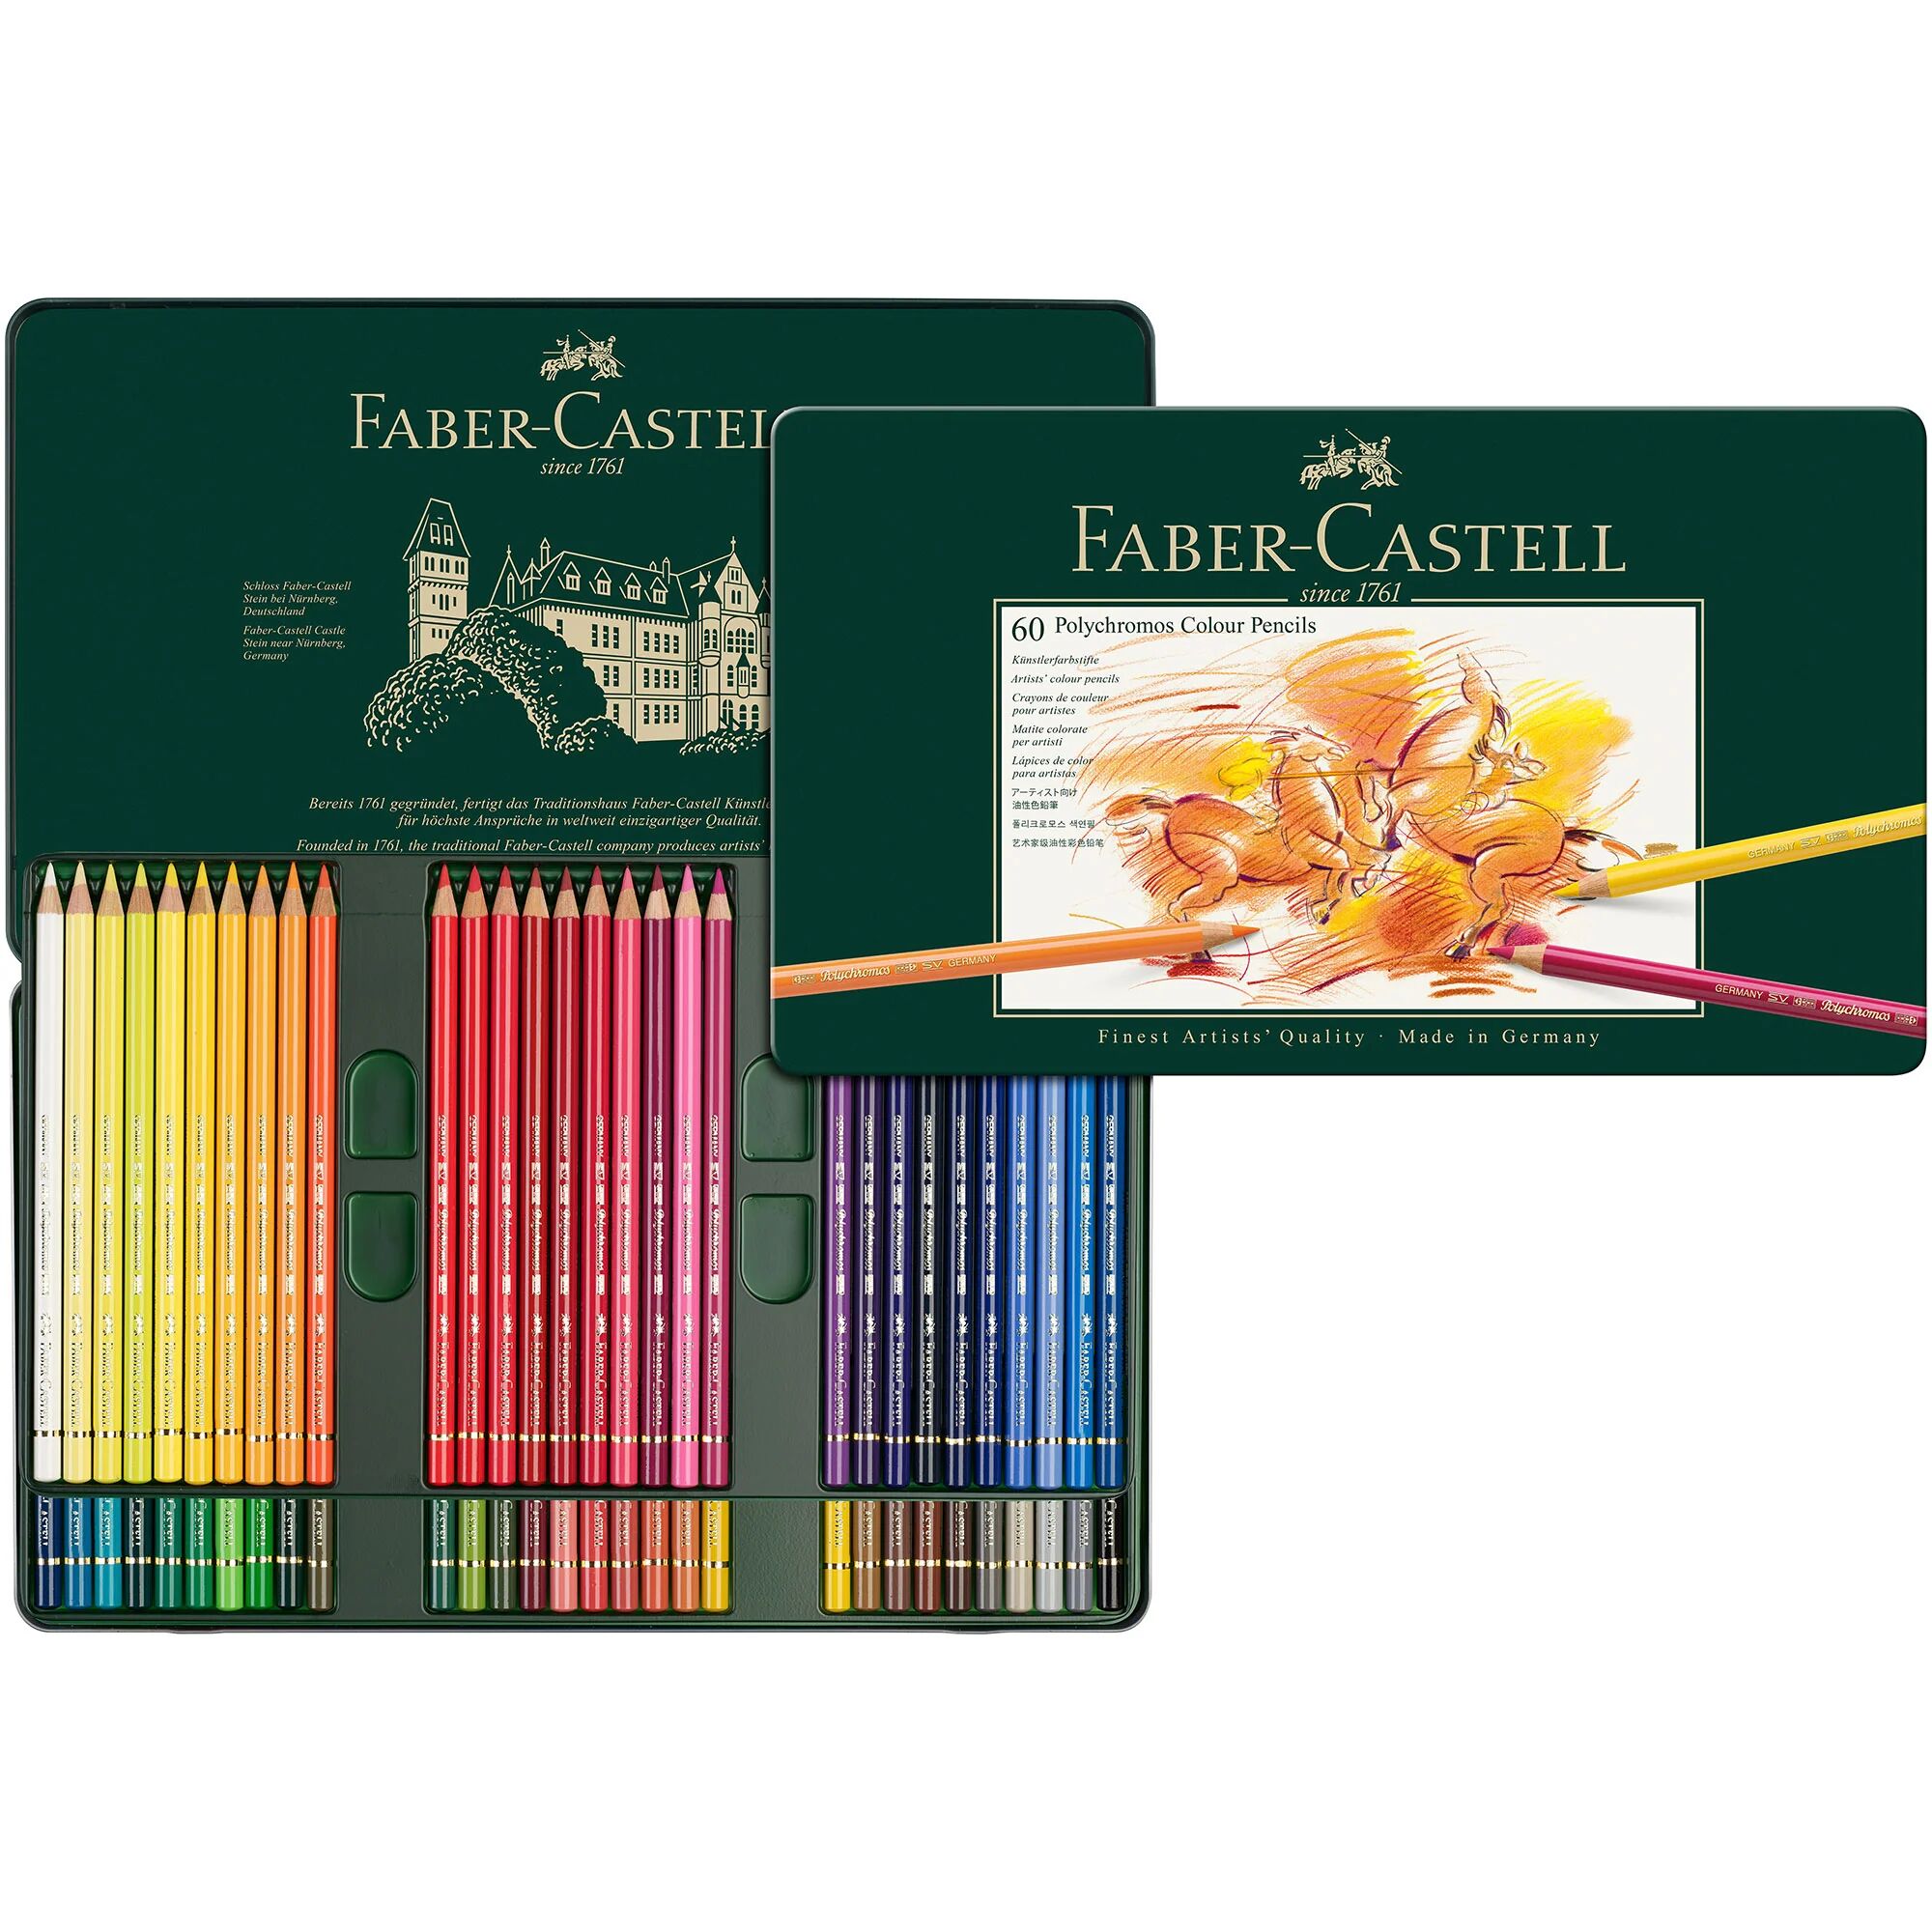 Faber Castell Polychromos Pencils Set of 60 - Includes A2 Art Storage Bag (RRP £14.25)